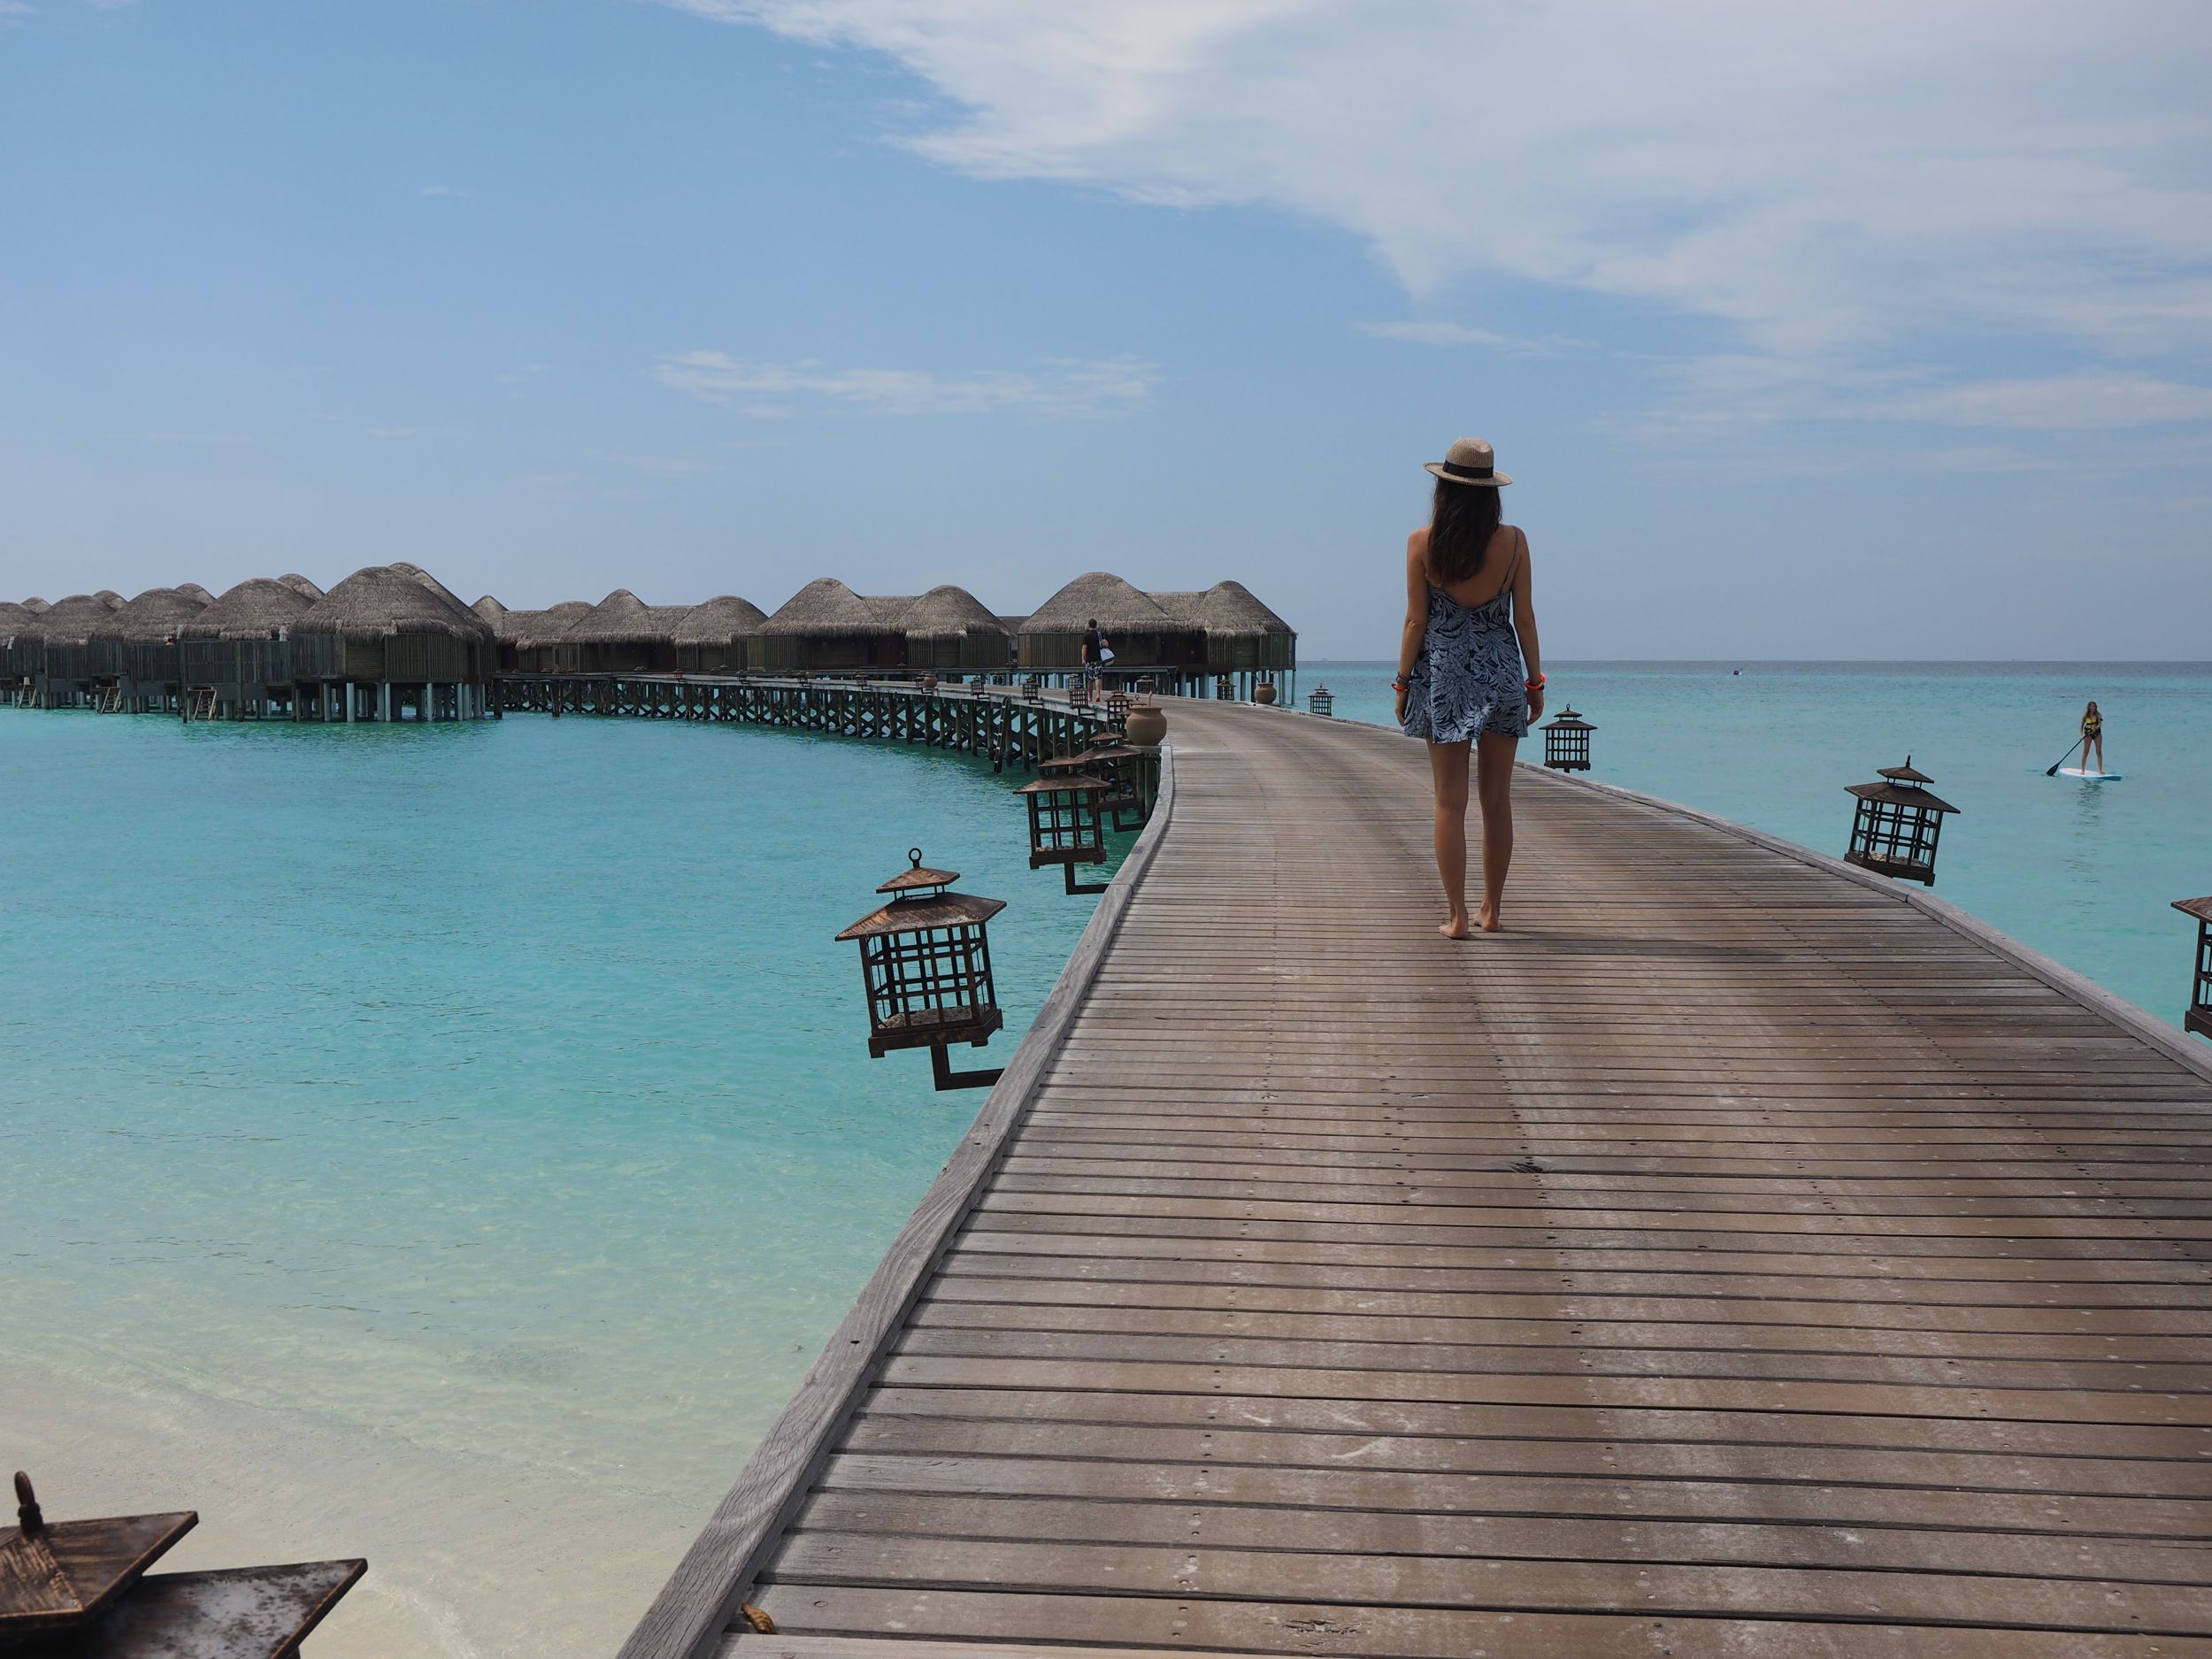 maldives, constance hotels, maldiv, constance, billur saatci, off nereye gitsem, offnegiysem, turkish blogger, heaven, vacation, moofushi, halaveli 